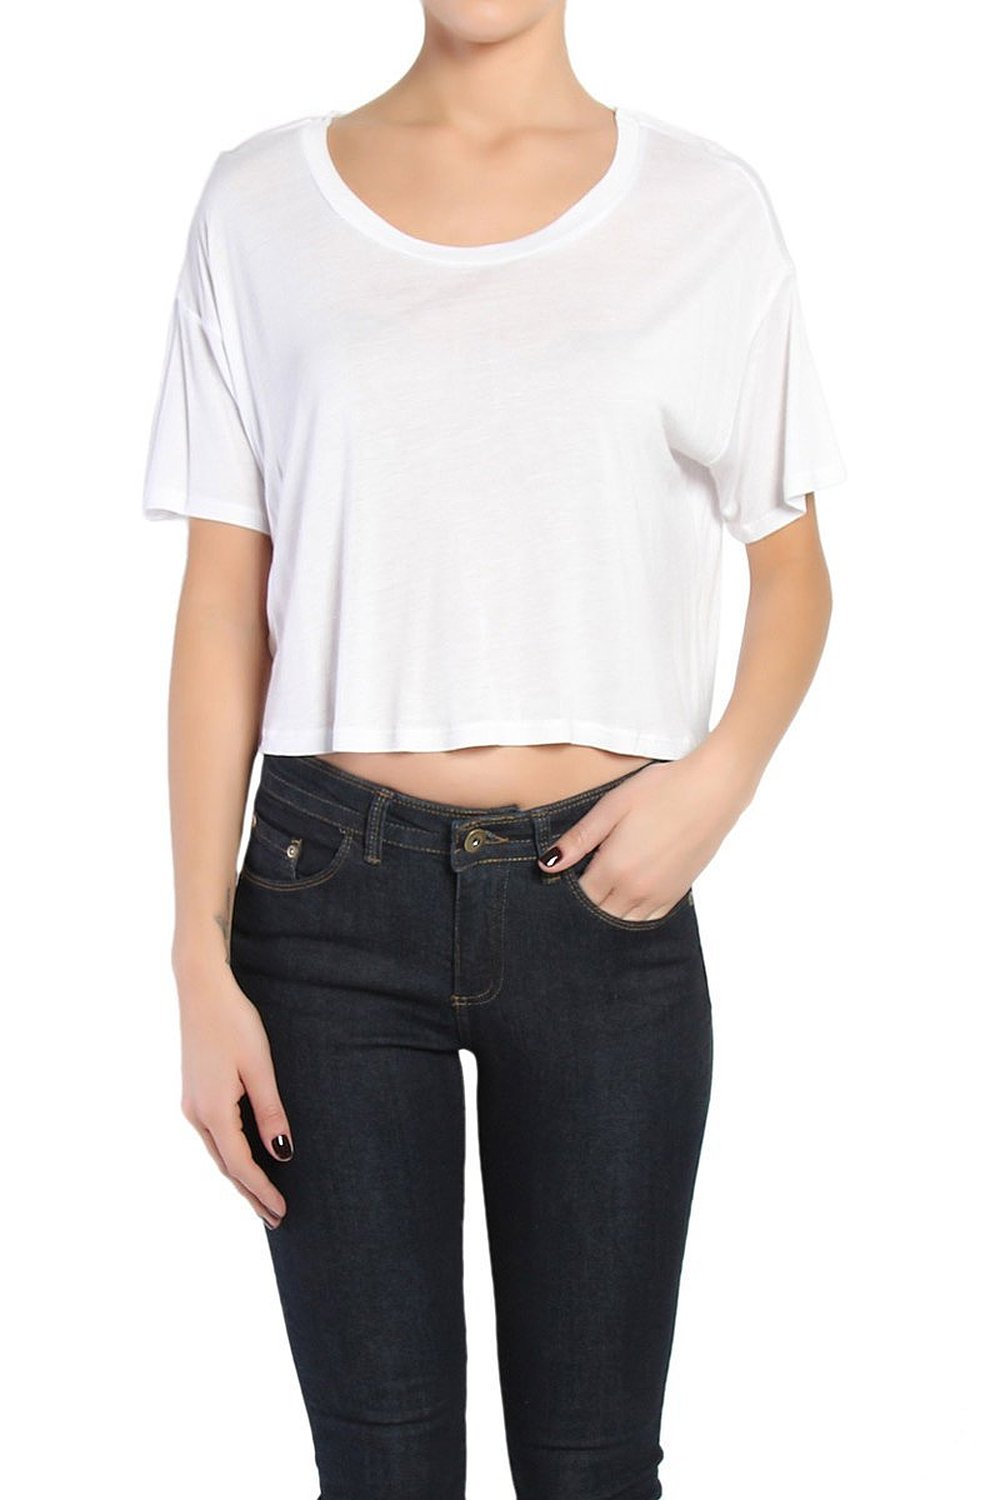 Short Cap Sleeves Scoop Neck Crop Top Stretch Mini Shirt Dance One Size